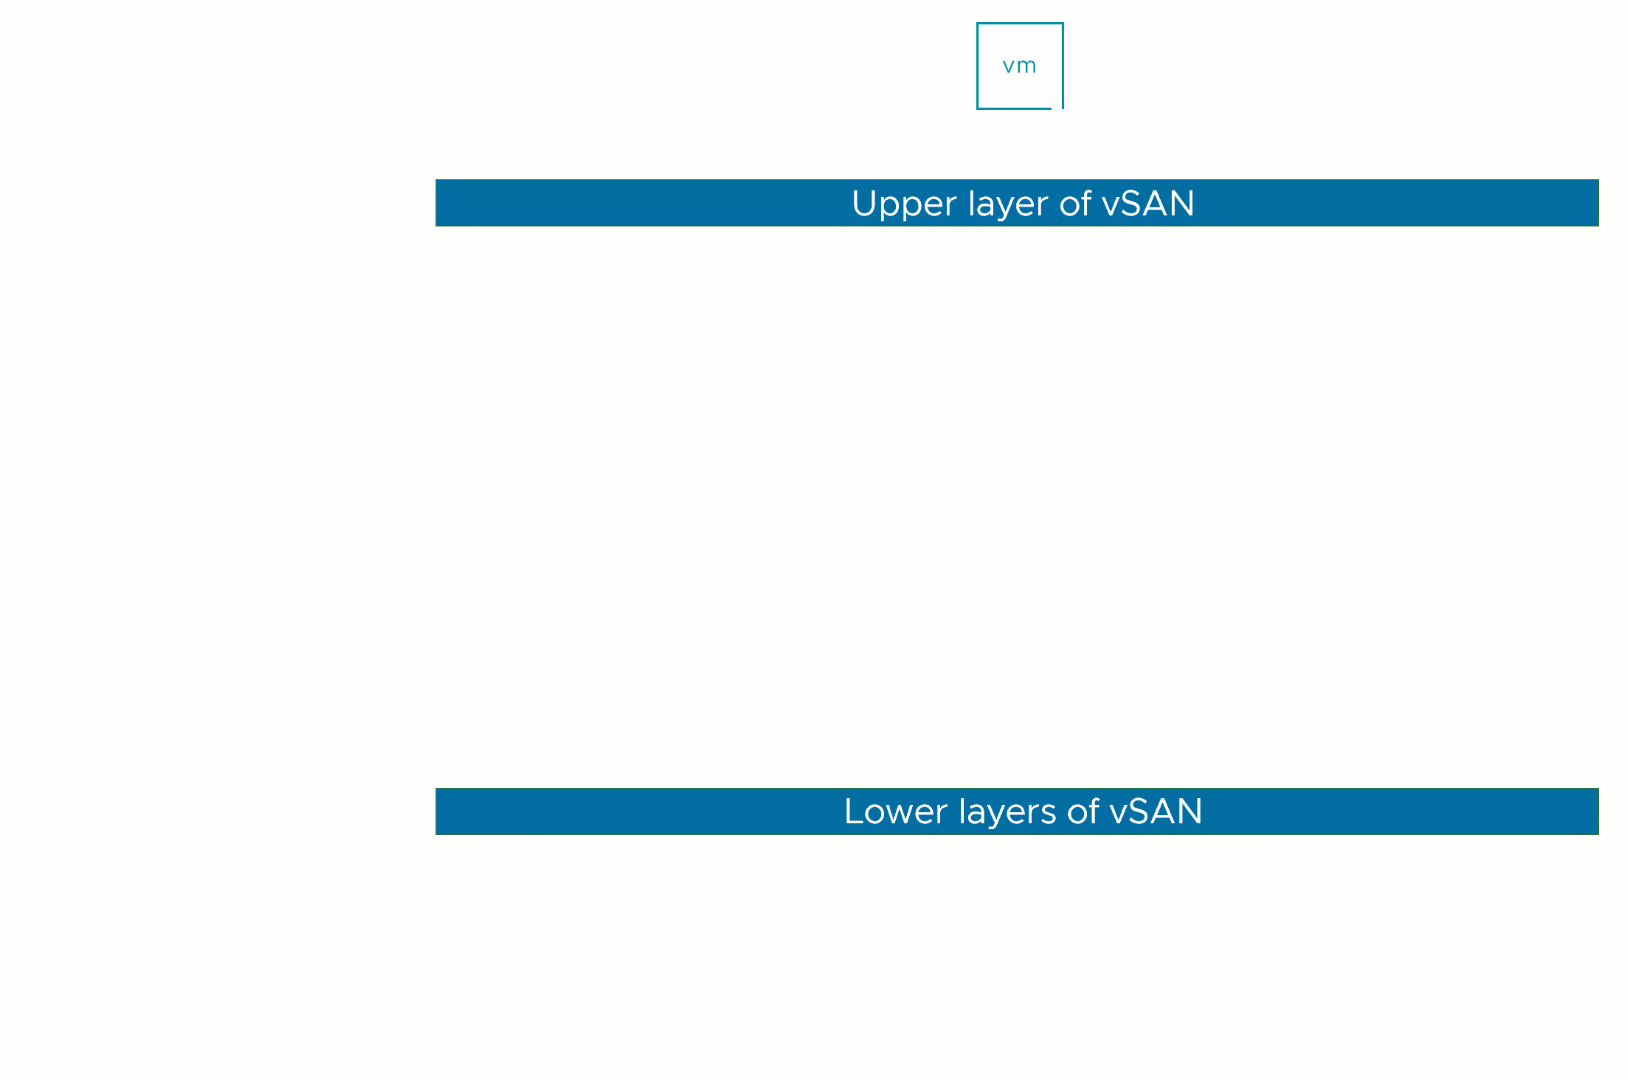 Running vSAN ESA? Change the default storage policy to RAID-5/6!